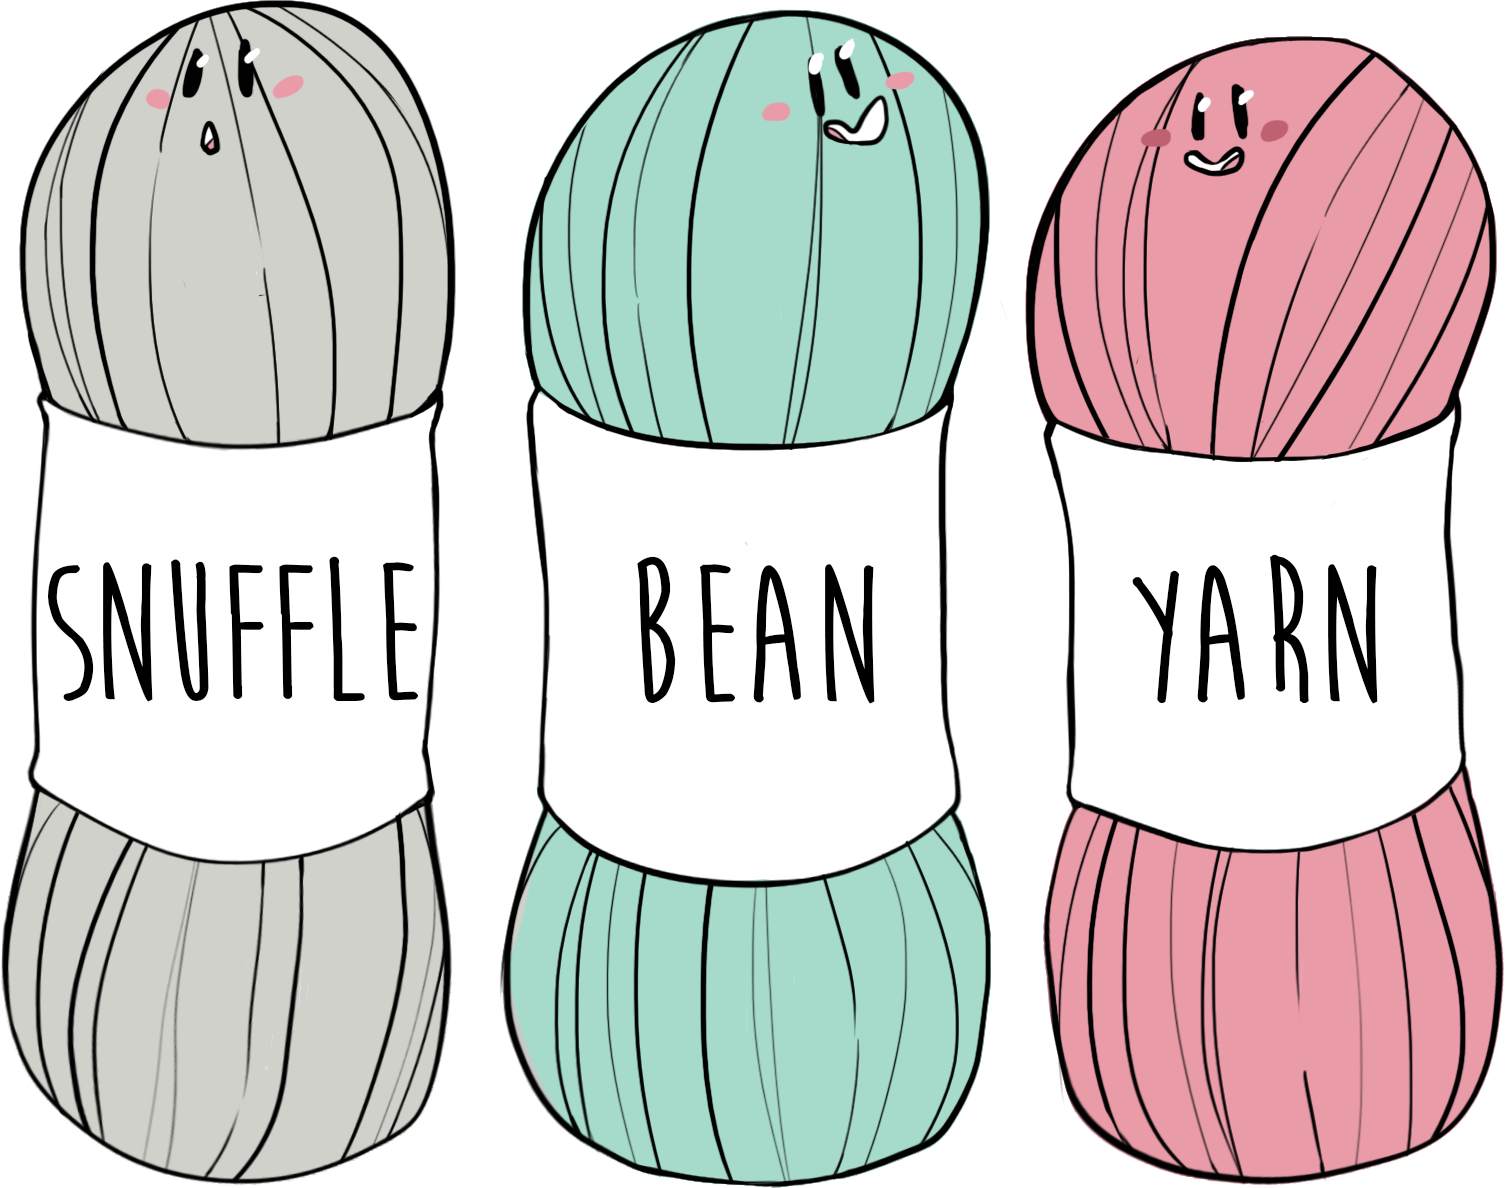 Snufflebean Yarn